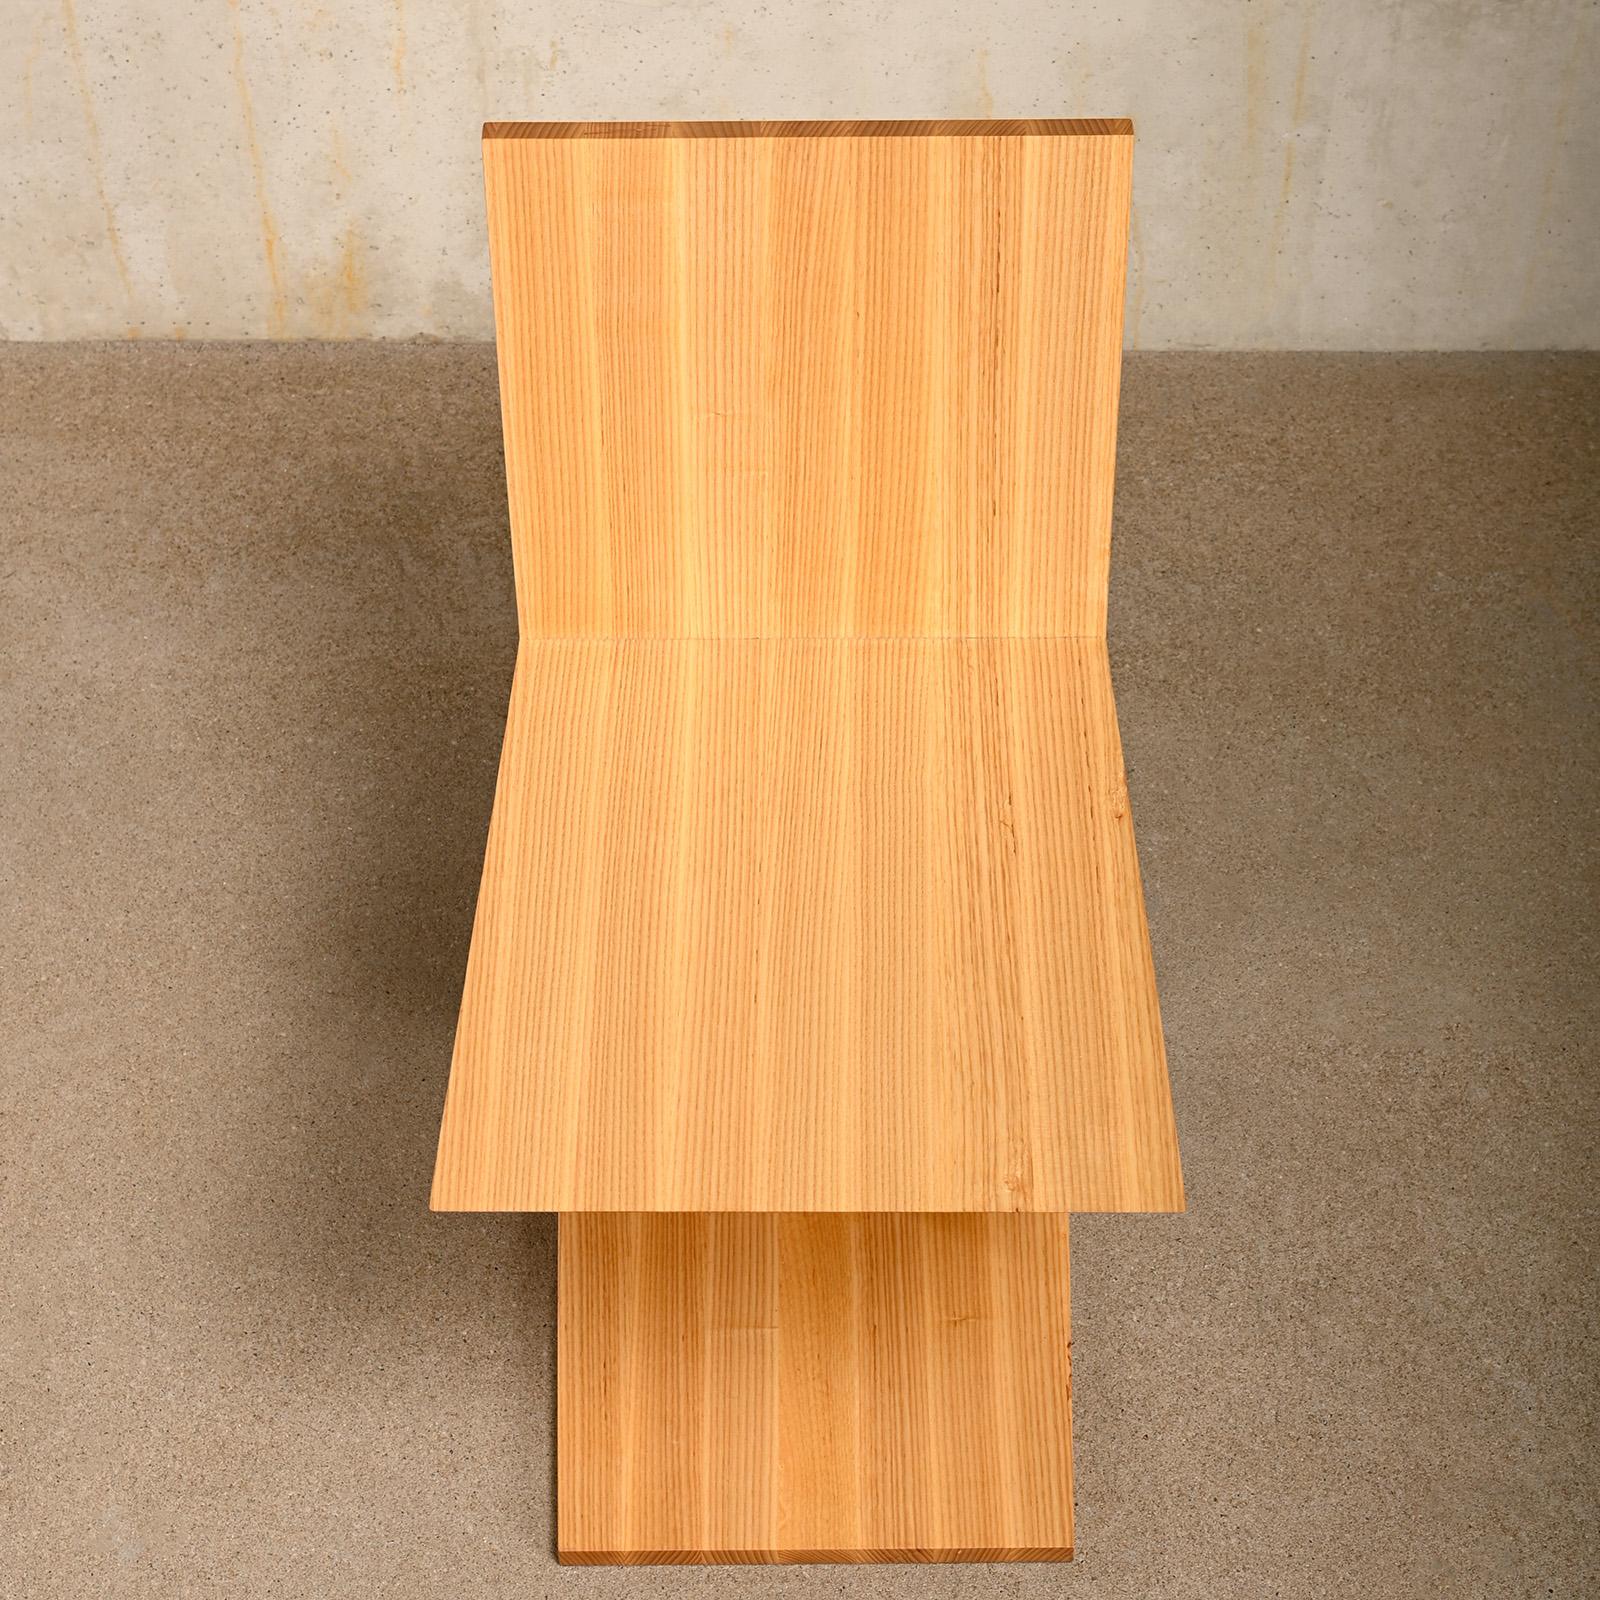 Gerrit Rietveld Zig Zag Chair is Ash wood 4